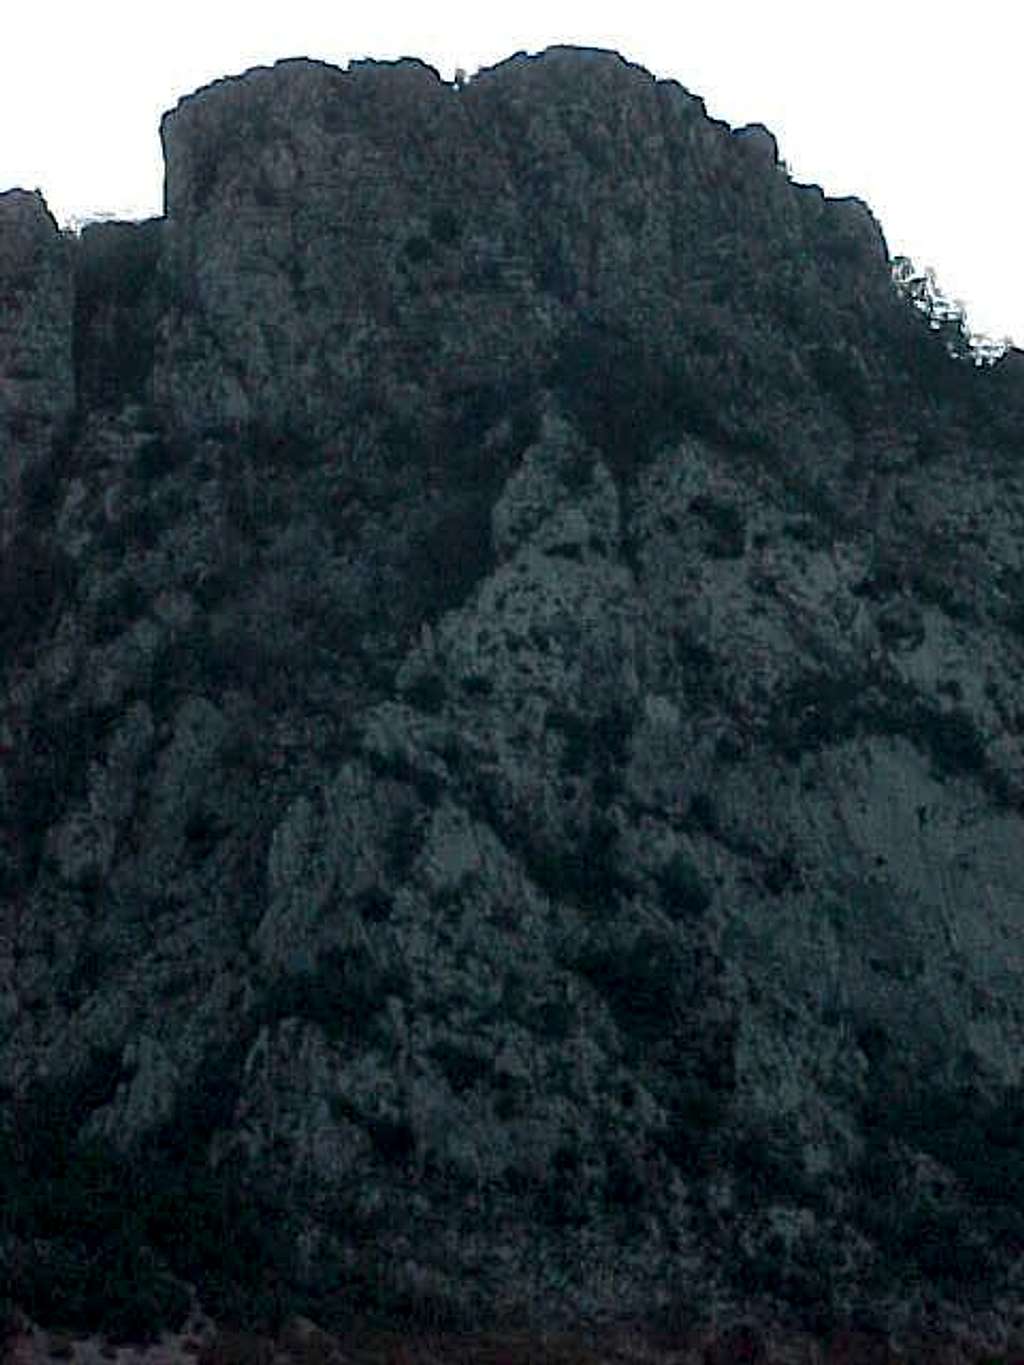 Gamtit East Side - Main Crag